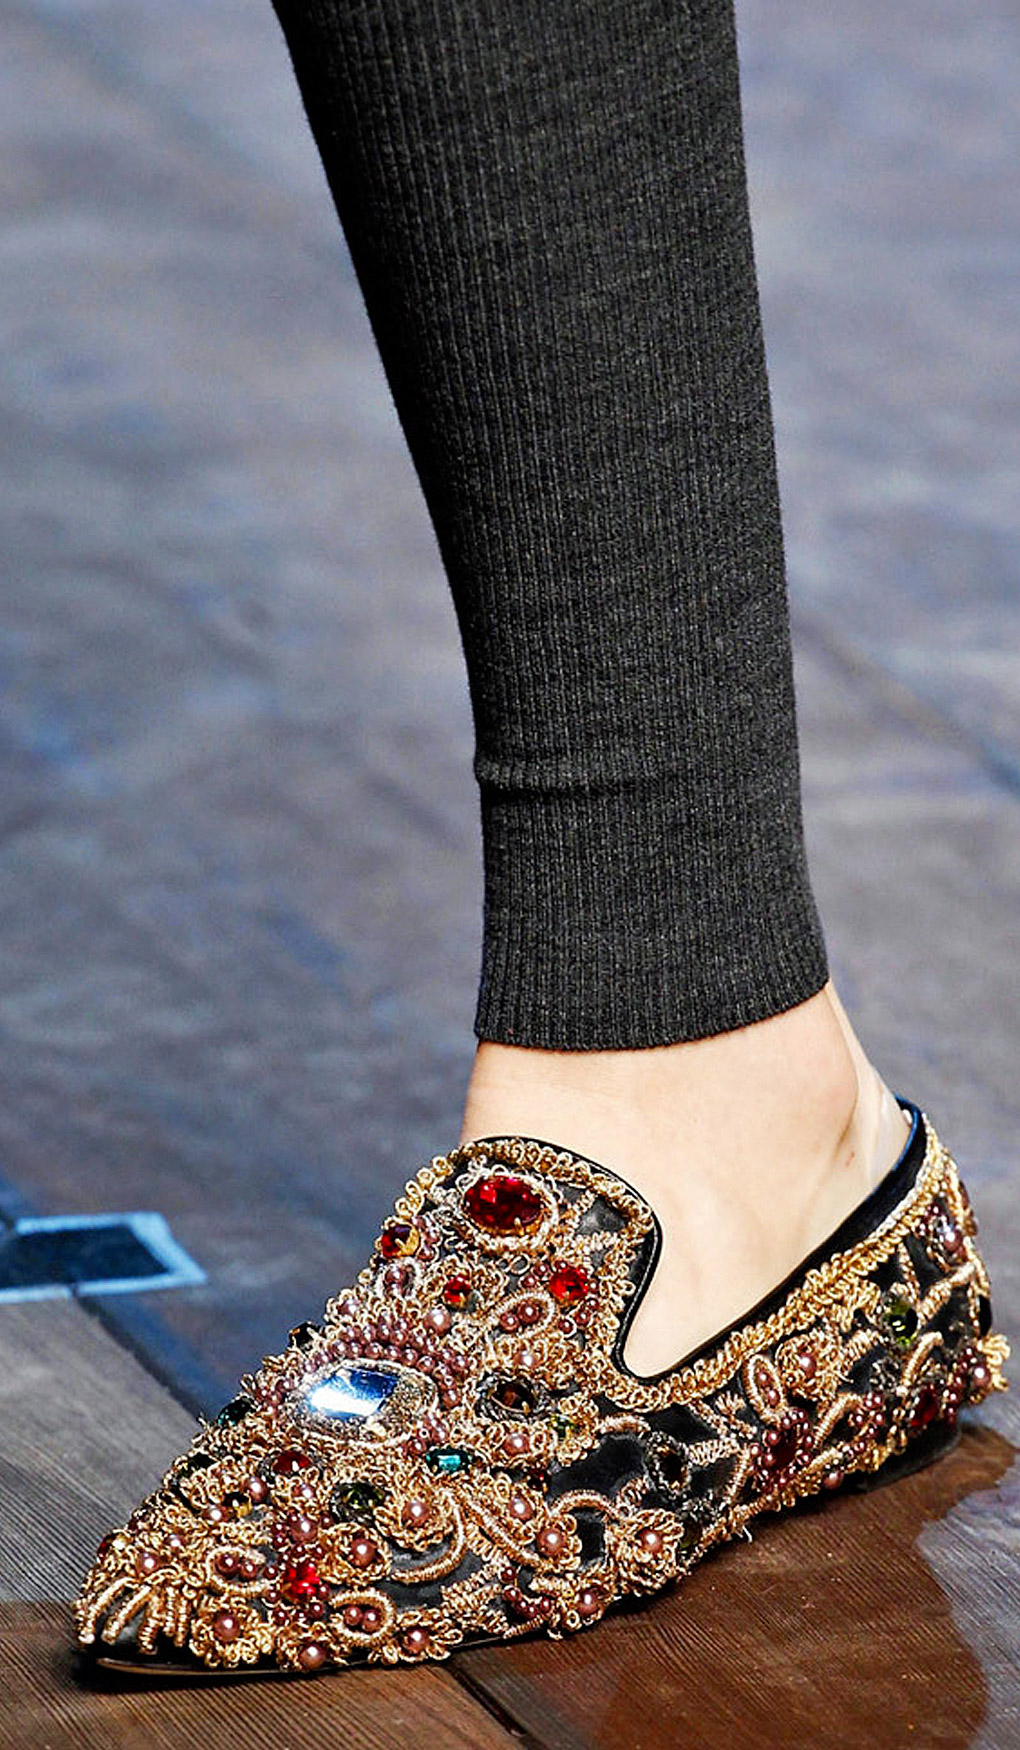 Dolce & Gabbana. Обувь осень/зима 2014/15